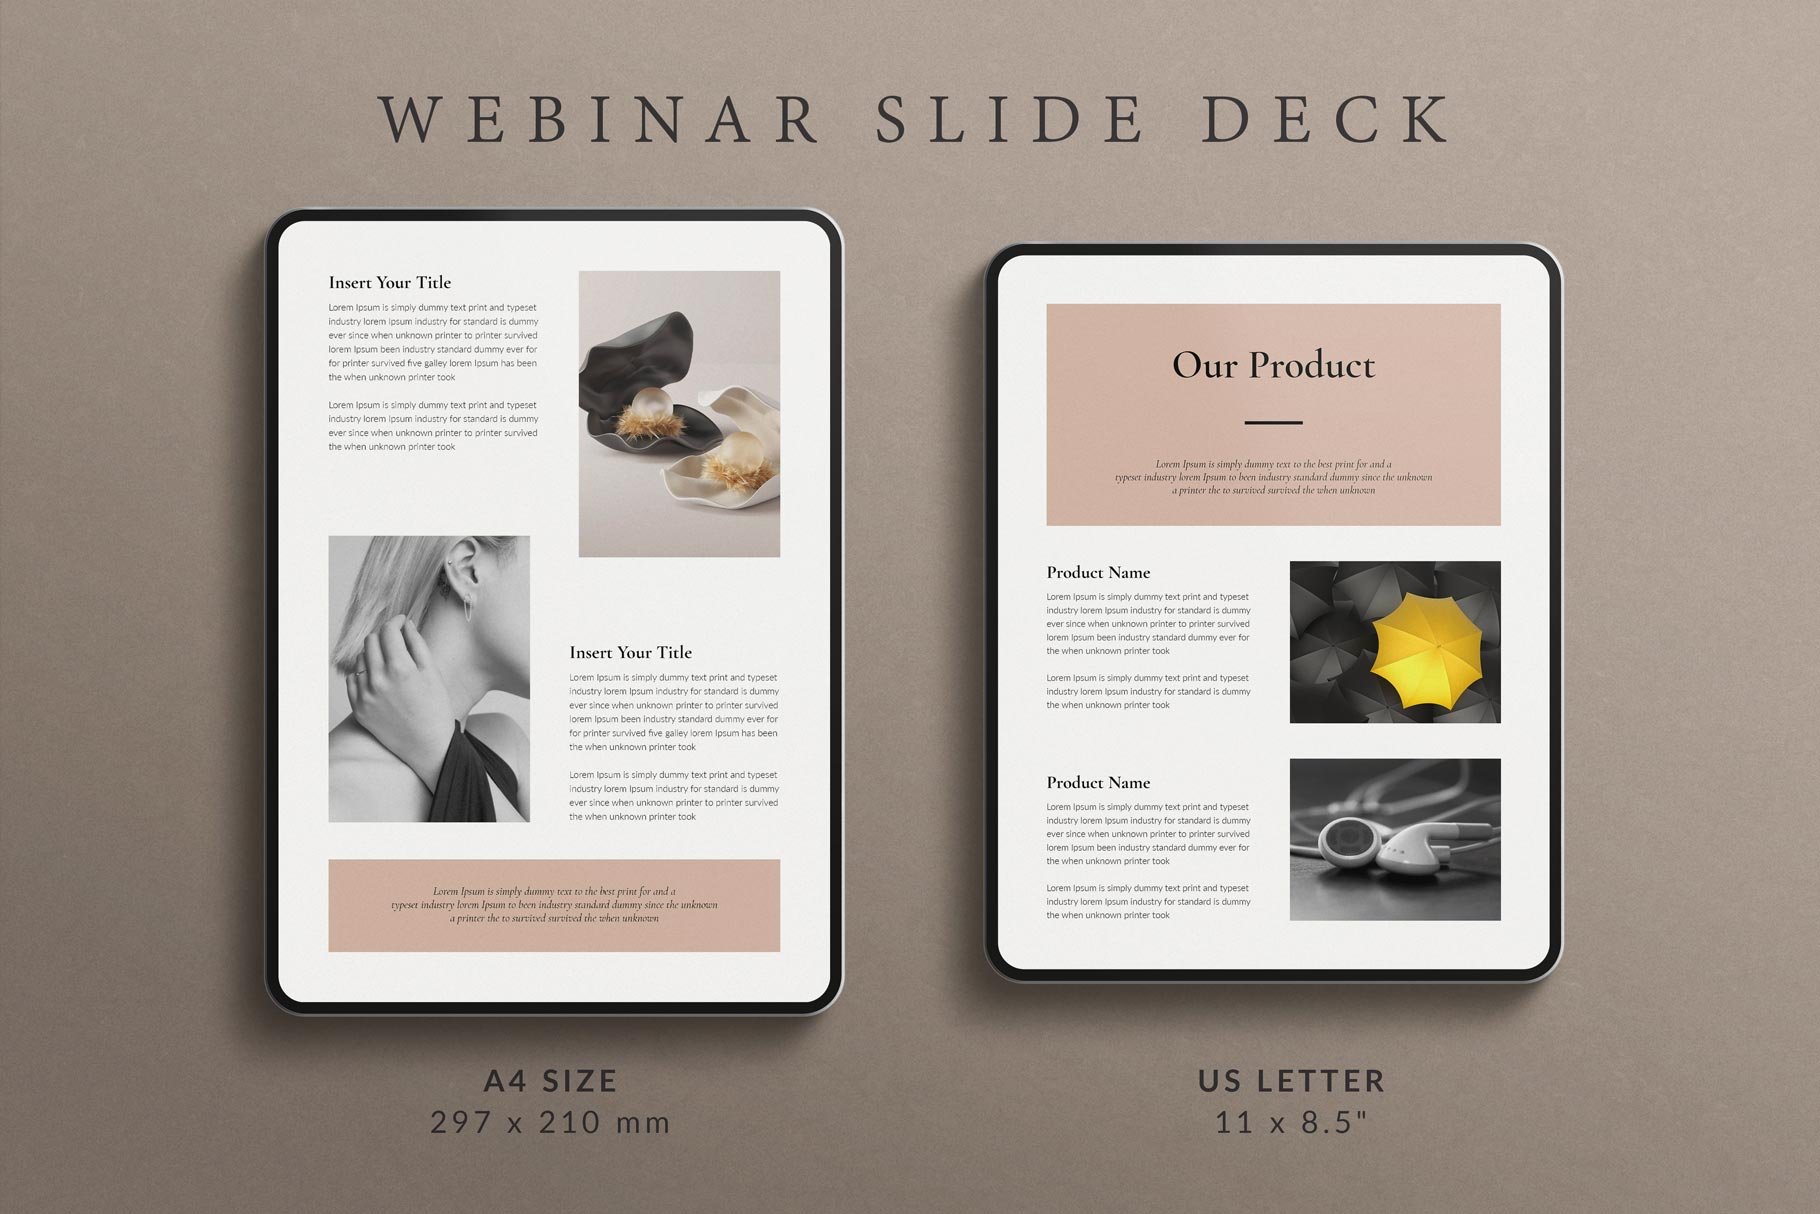 Webinar Slide Deck Template preview image.